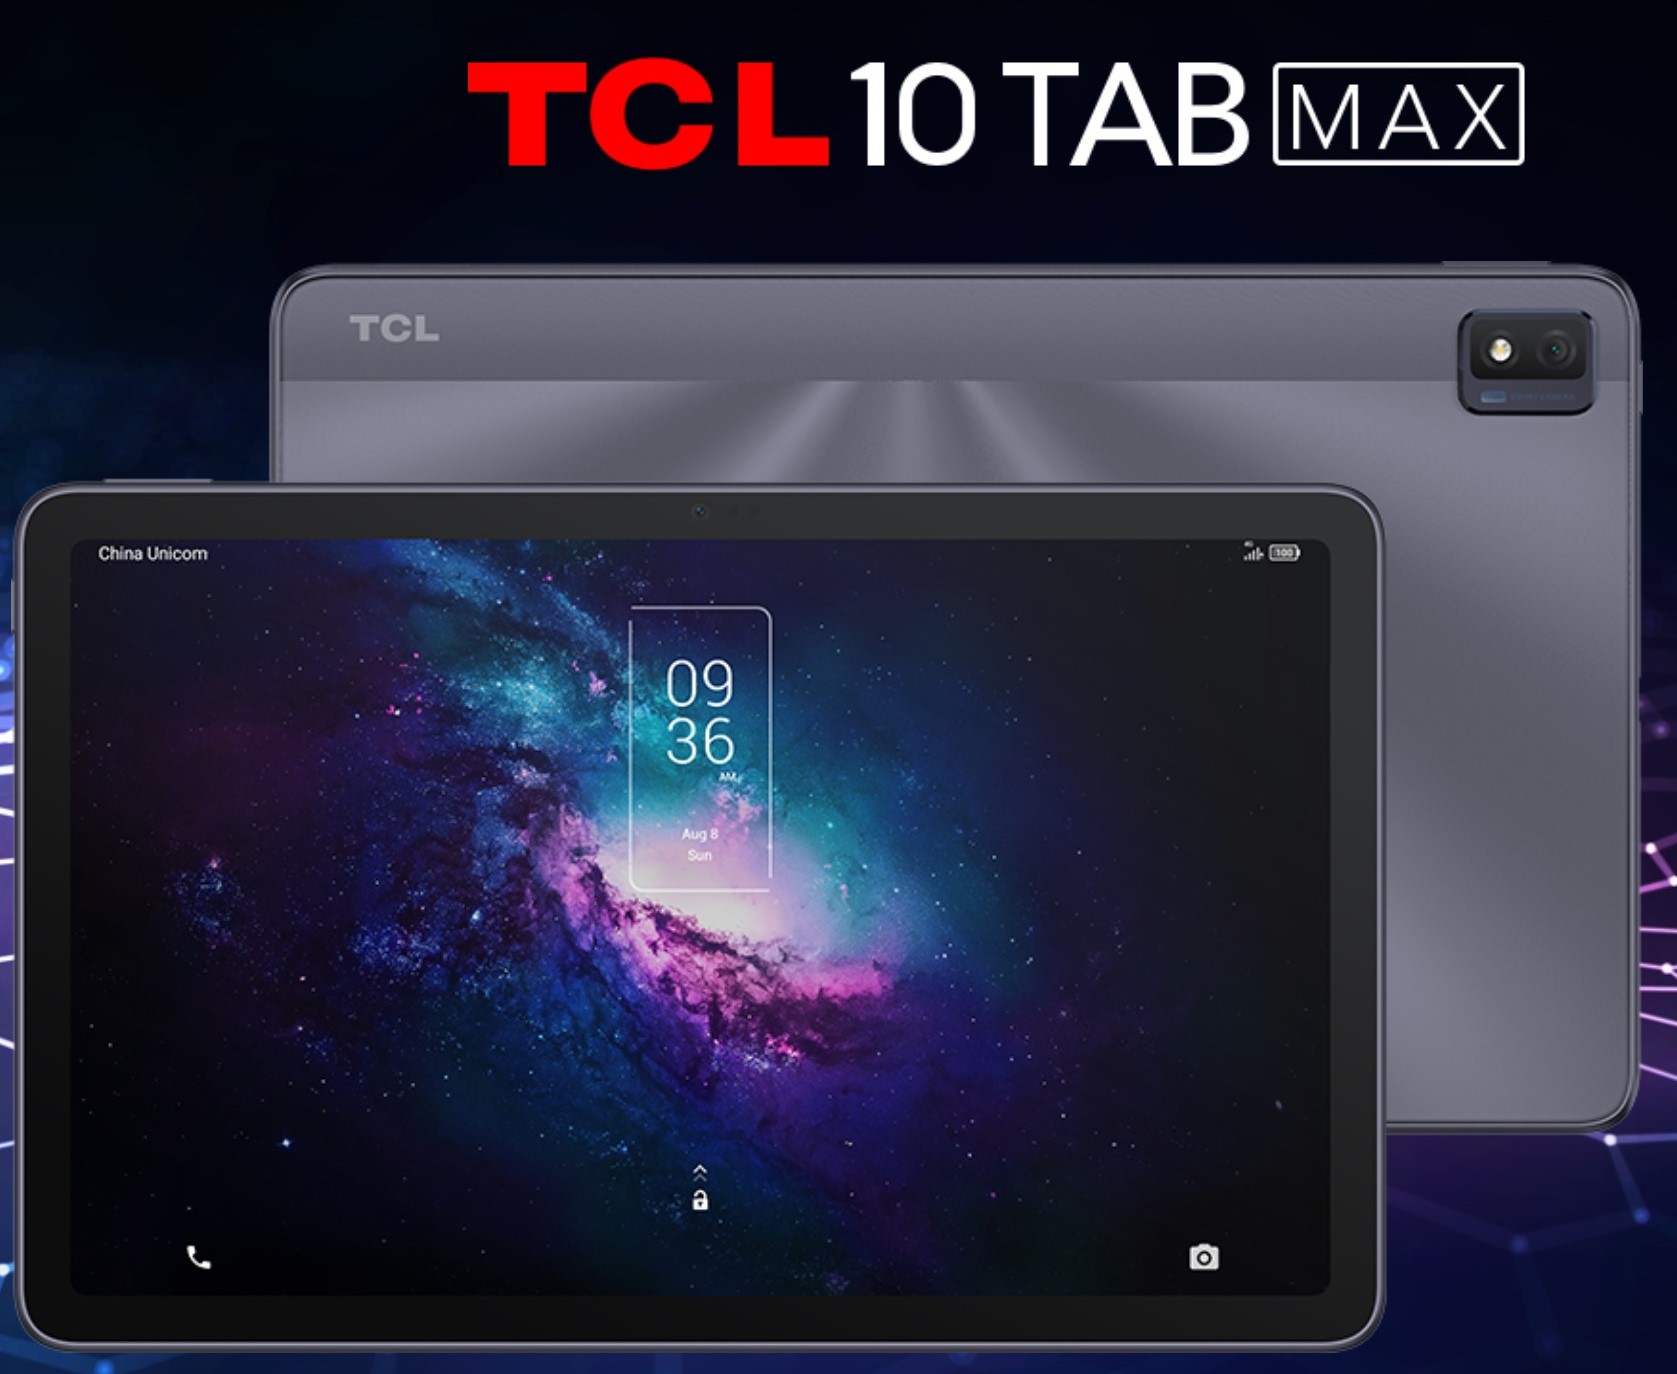 TCL 10 Tab Max 4g   Review